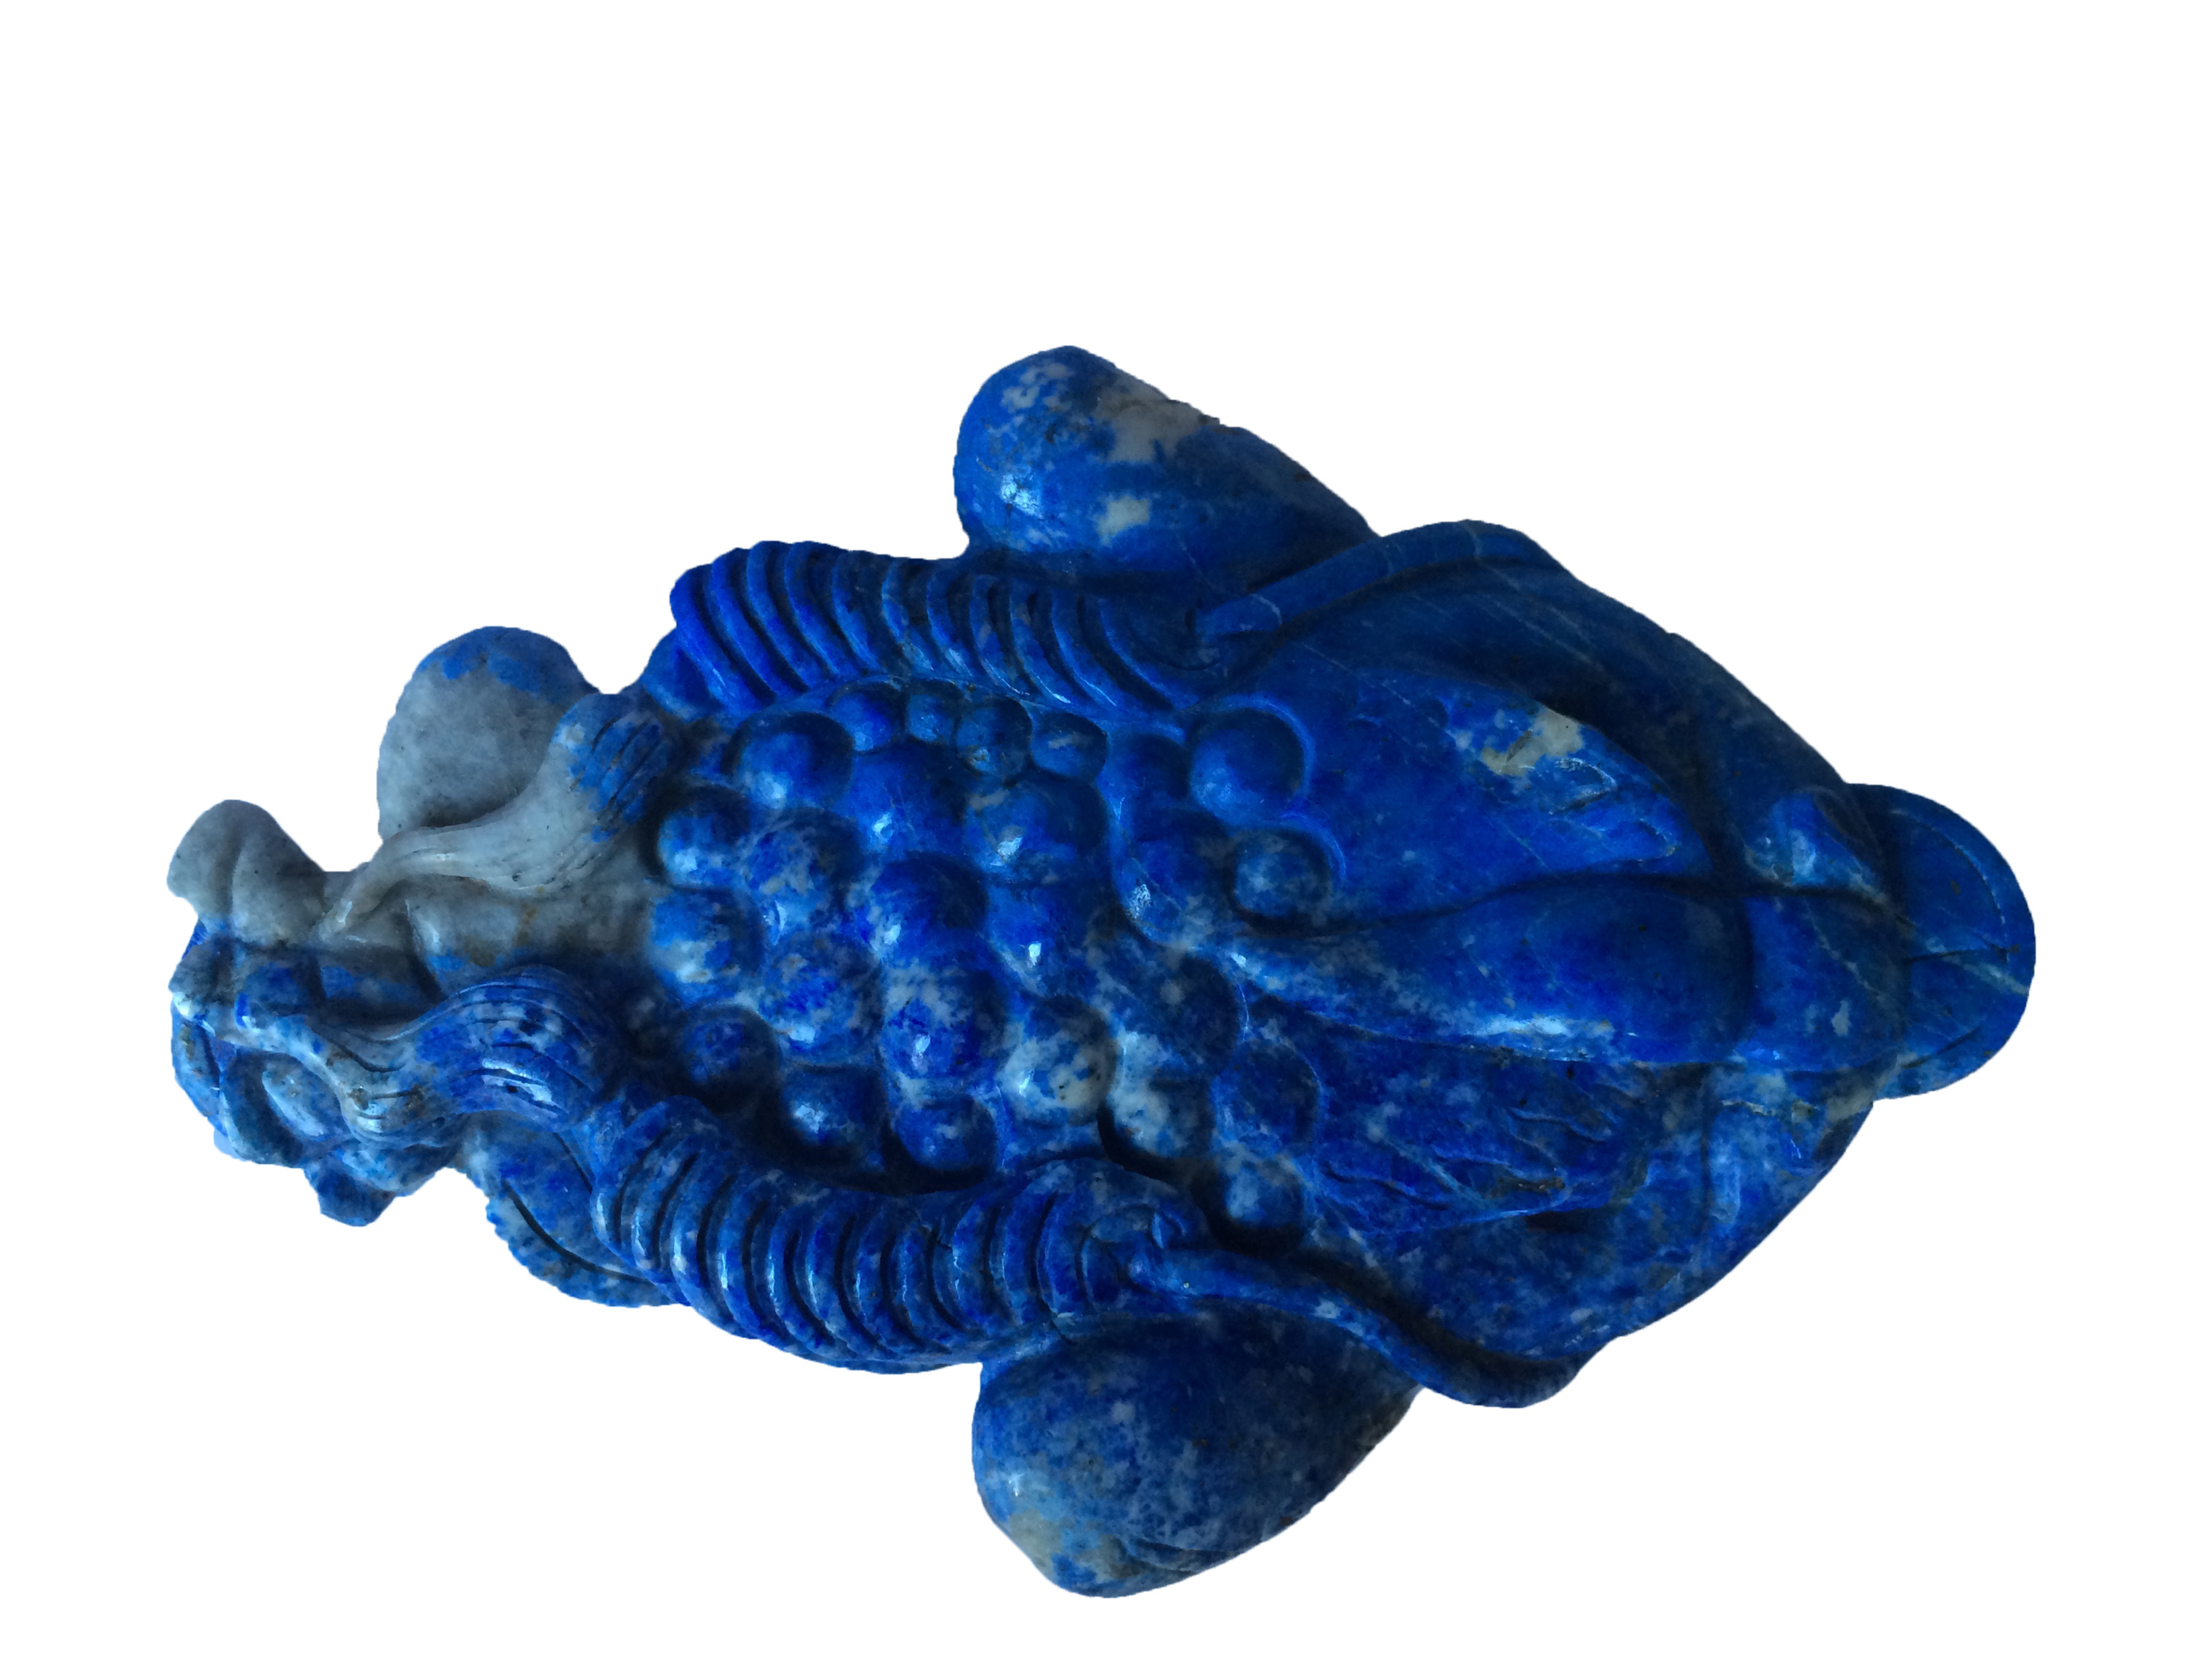 grenouille-de-prosperite-en-lapis-lazuli-pei-441-mi11092009-020-1469879921